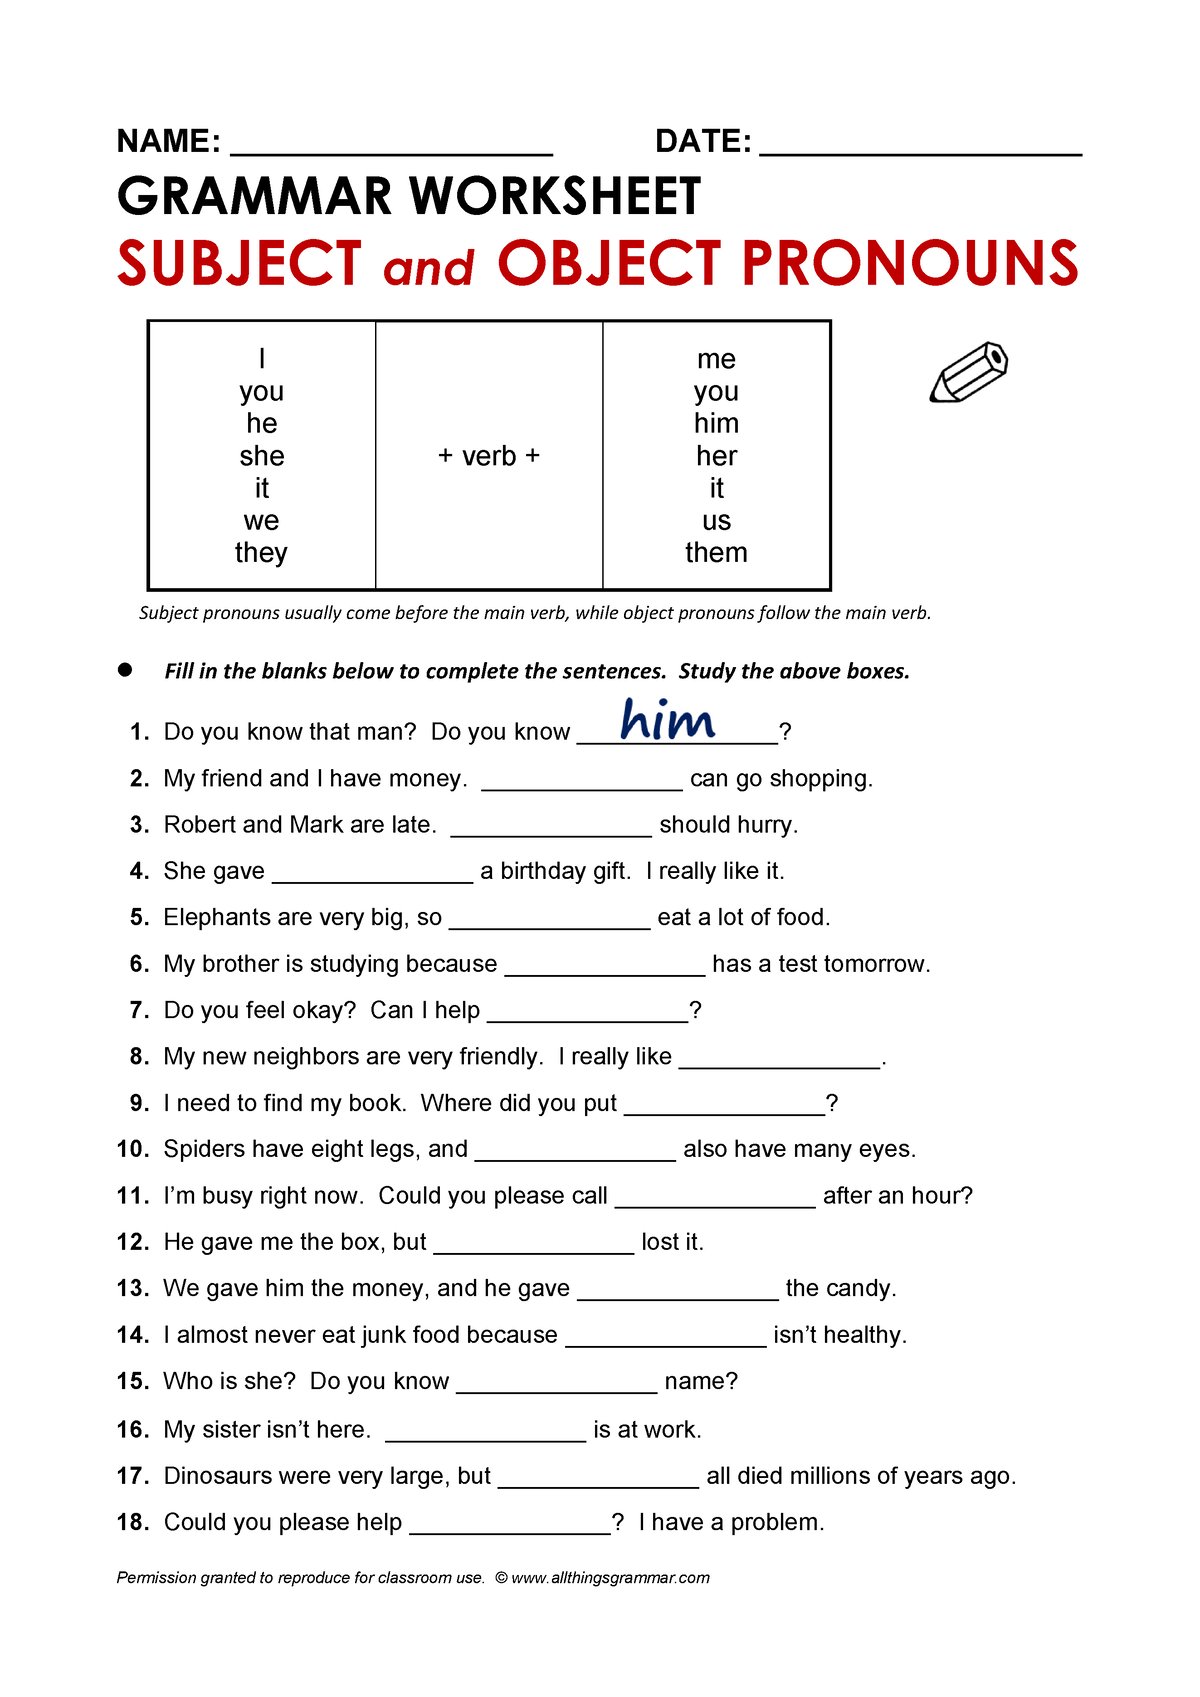 object-pronouns-worksheet-3-your-home-teacher